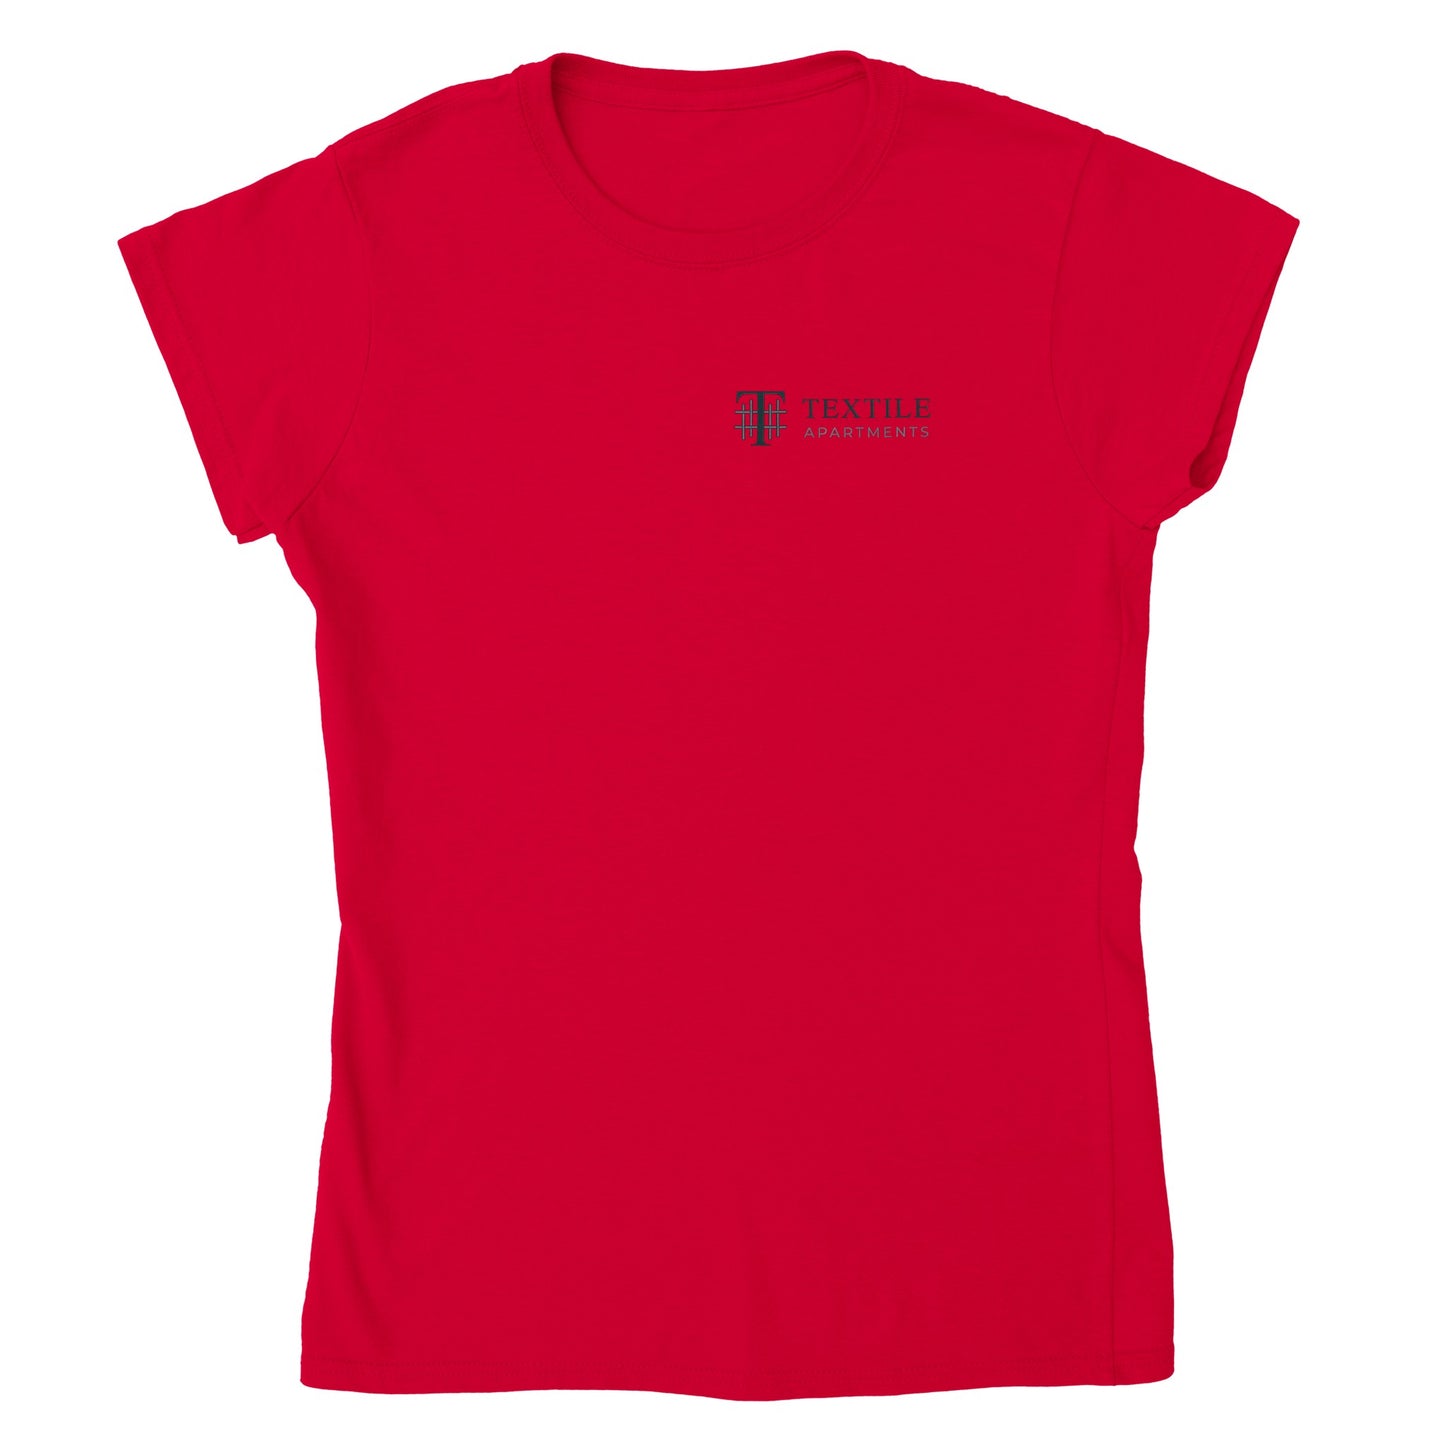 Textile Apartments - Classic Womens Crewneck T-shirt